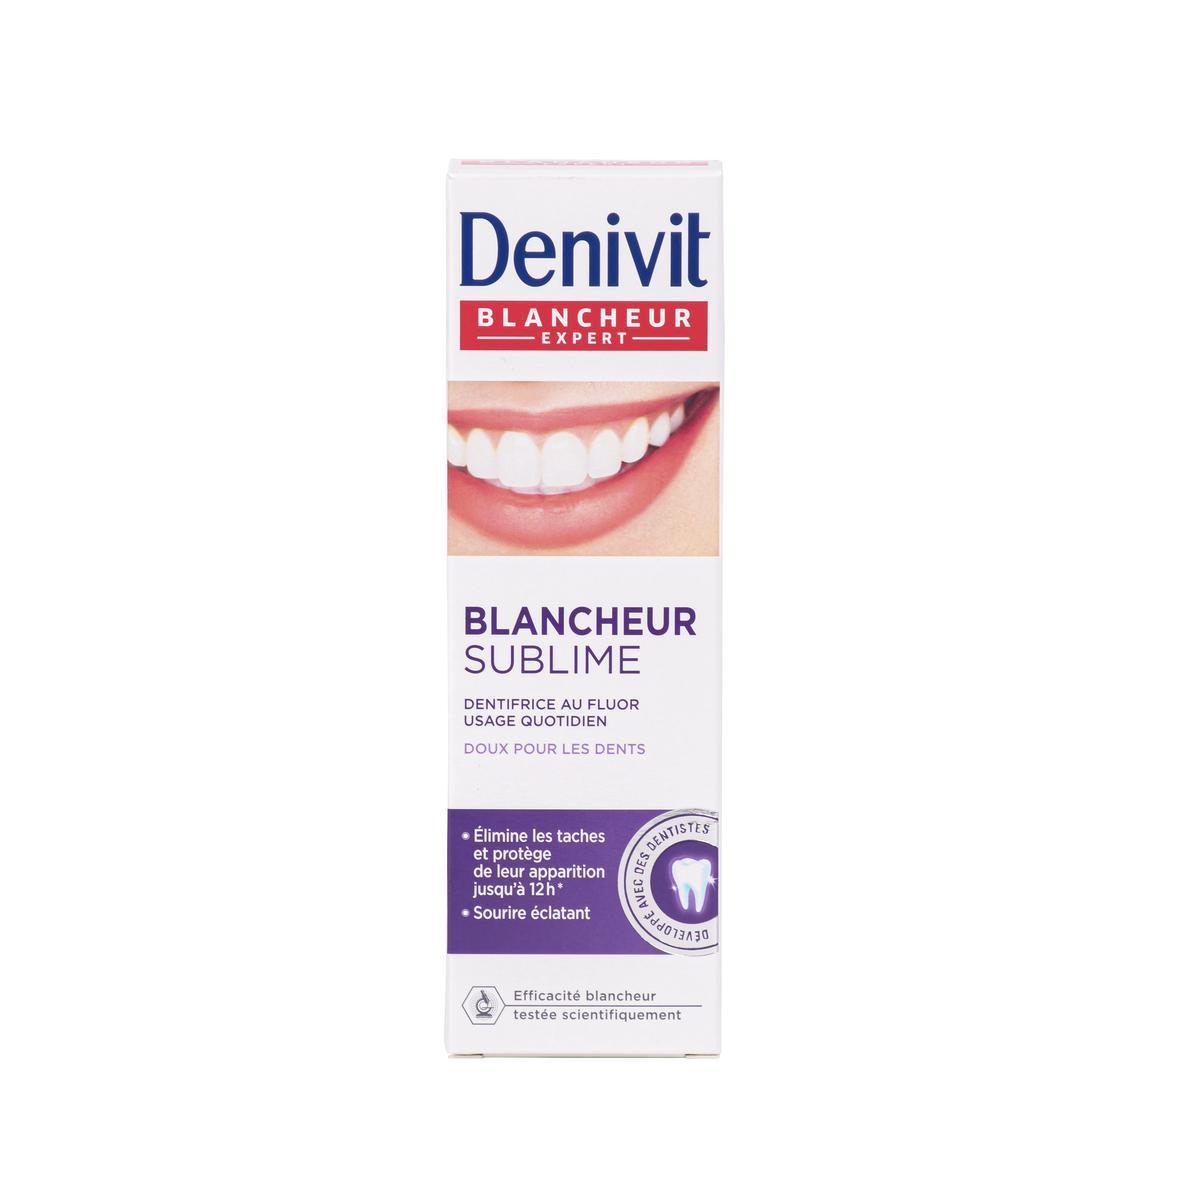 Dentifrice DENIVIT - 50 ml